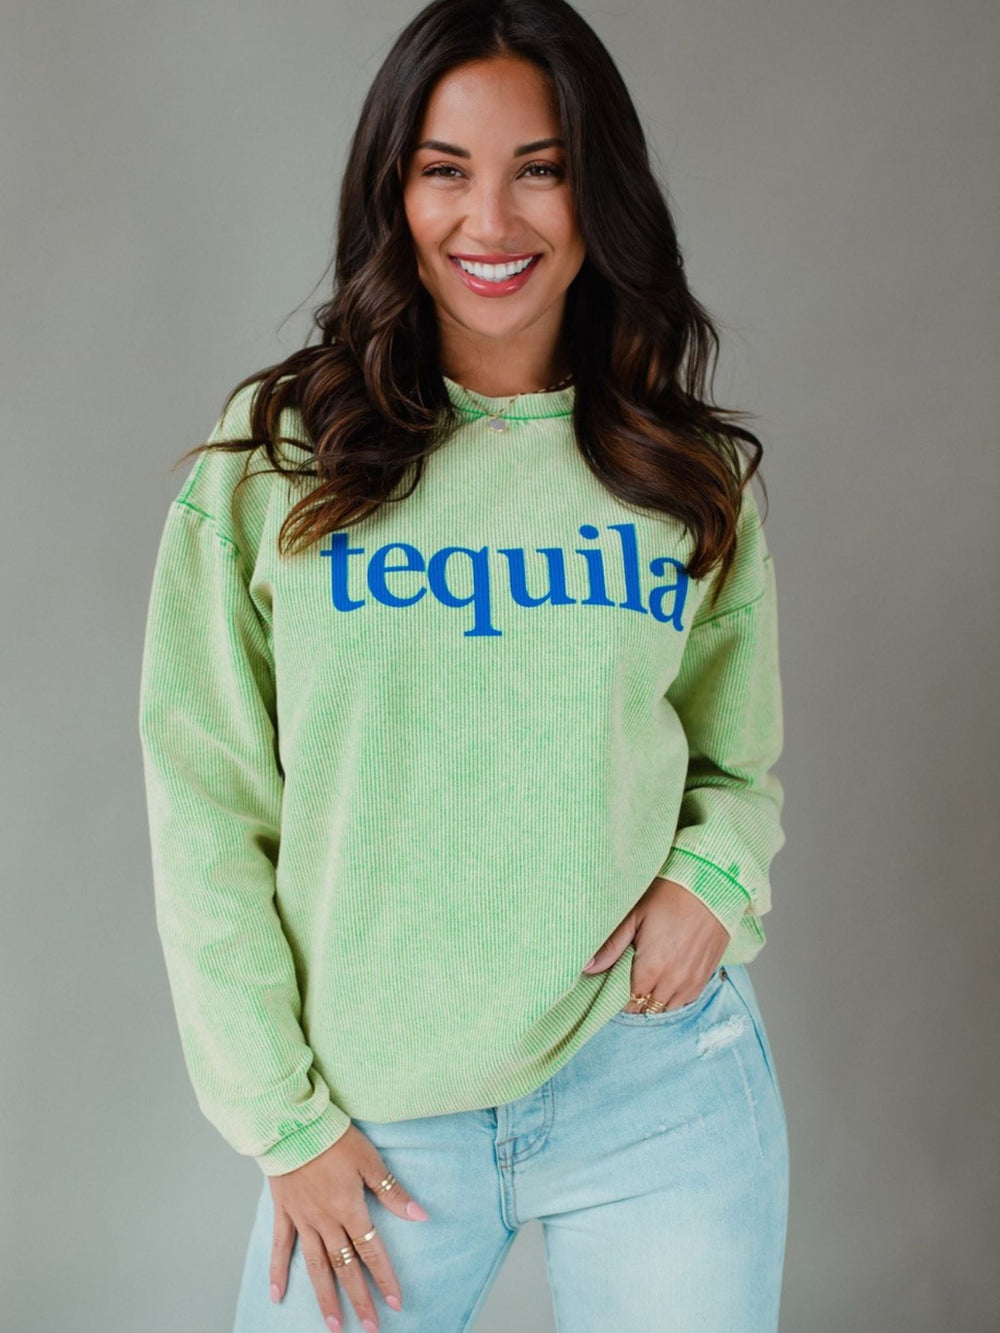 Tequila Corded Graphic SweatshirtScreen tees